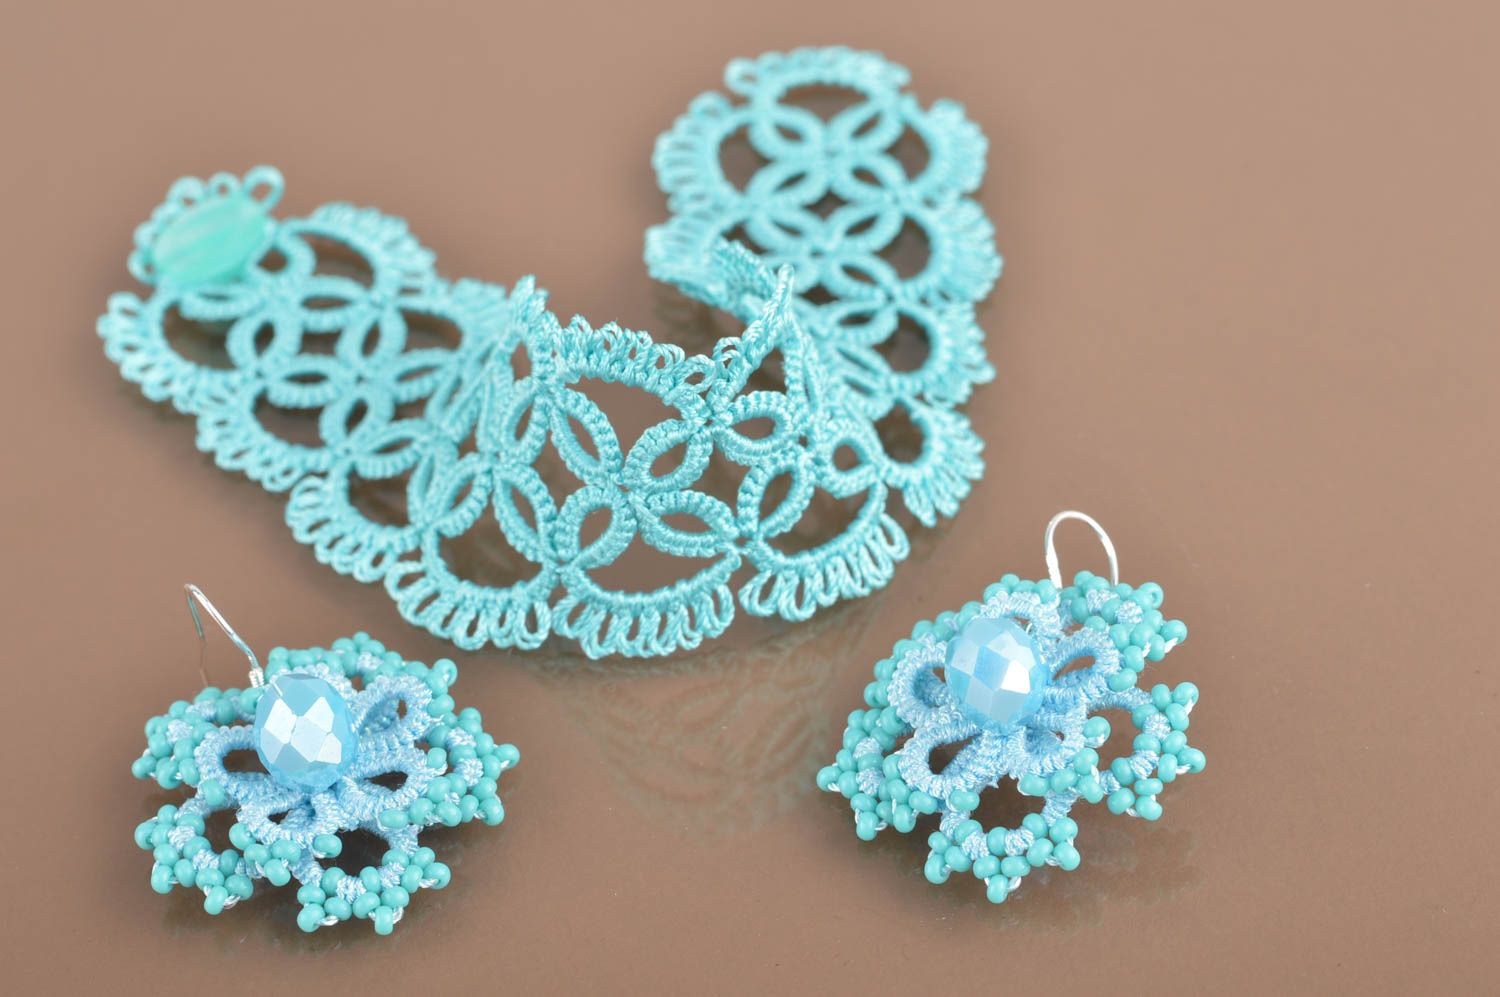 Handmade blue lace tatted jewelry set 2 items wrist bracelet and dangle earrings photo 2